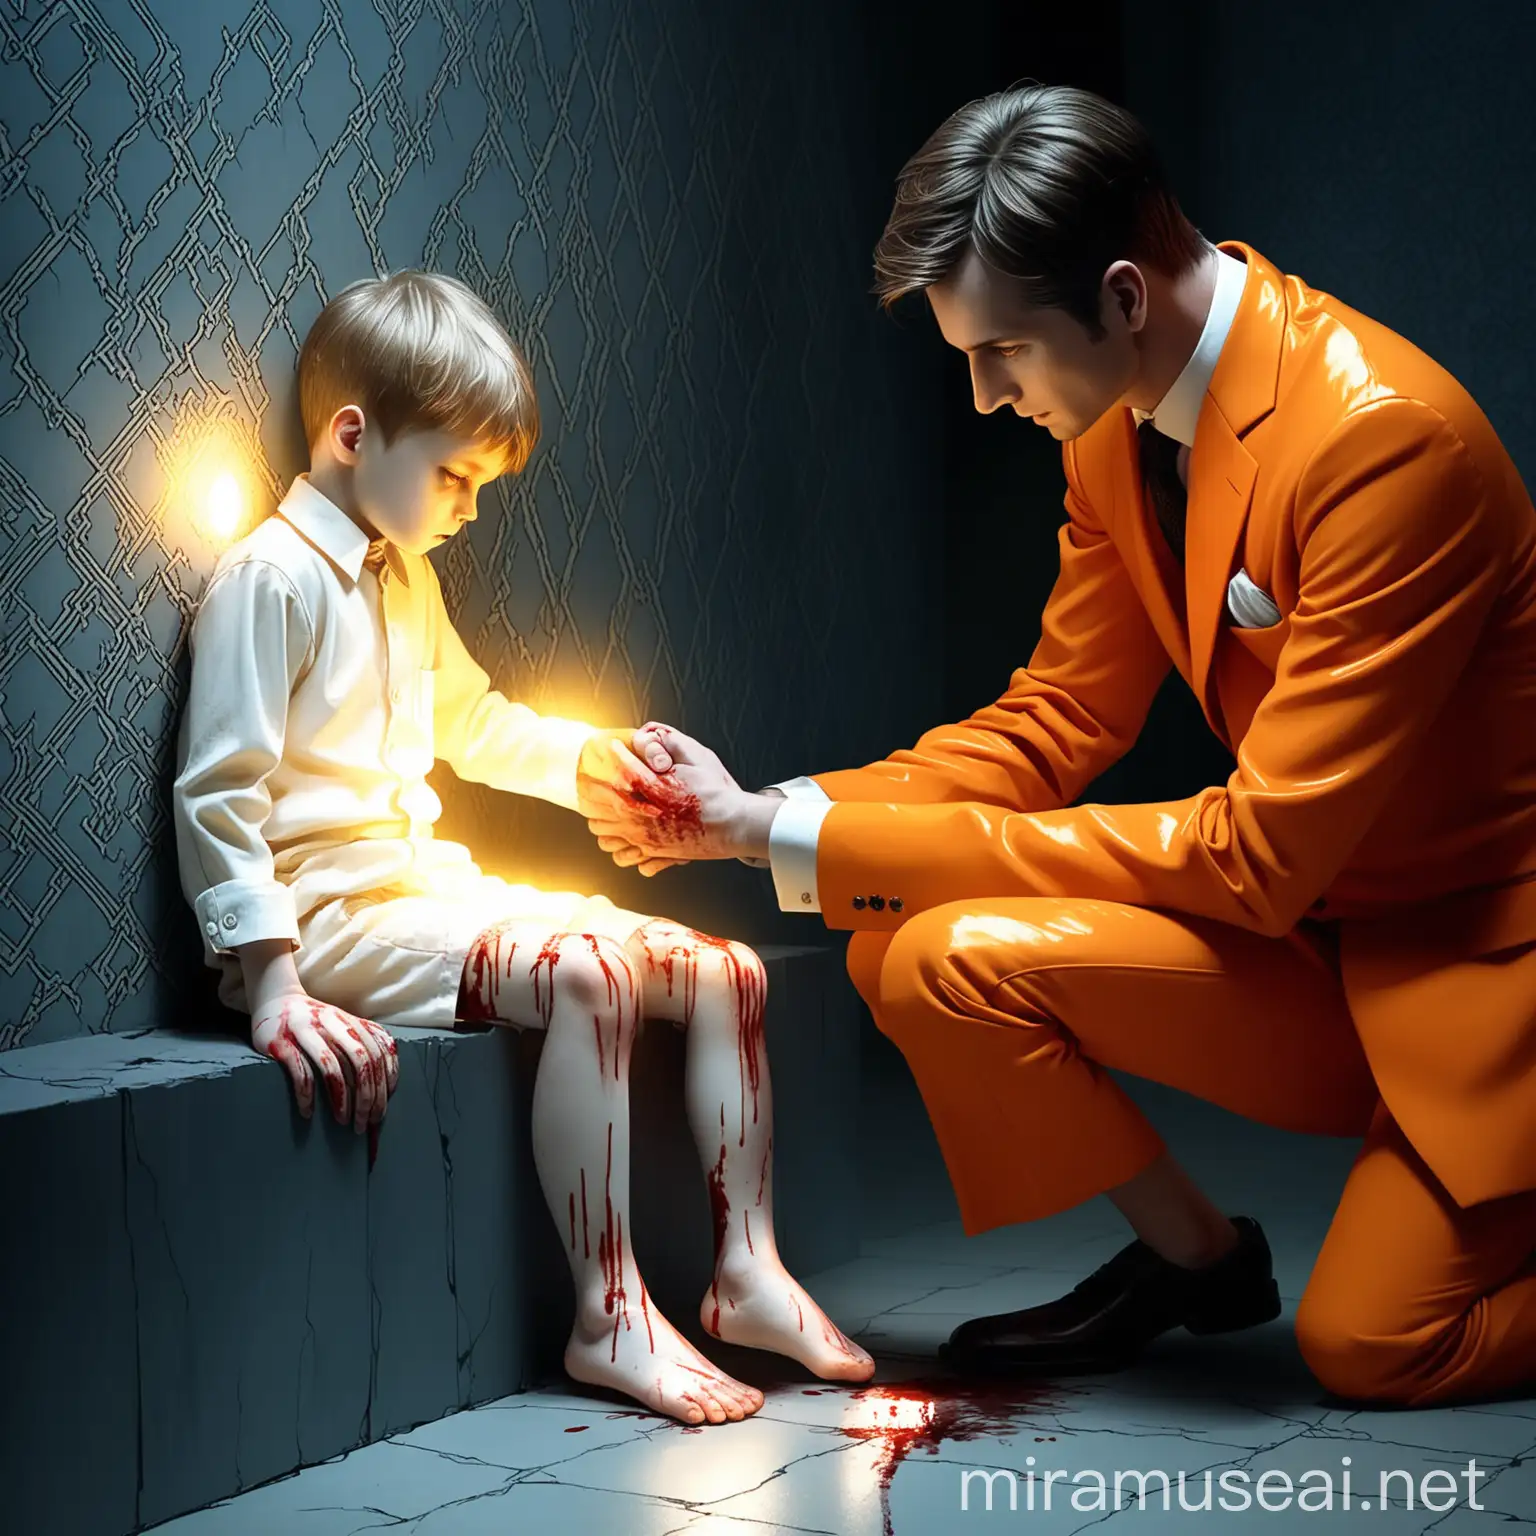 Mystical Healing Orange Suit Man Soothes Bleeding EightYearOld in Enigmatic Room